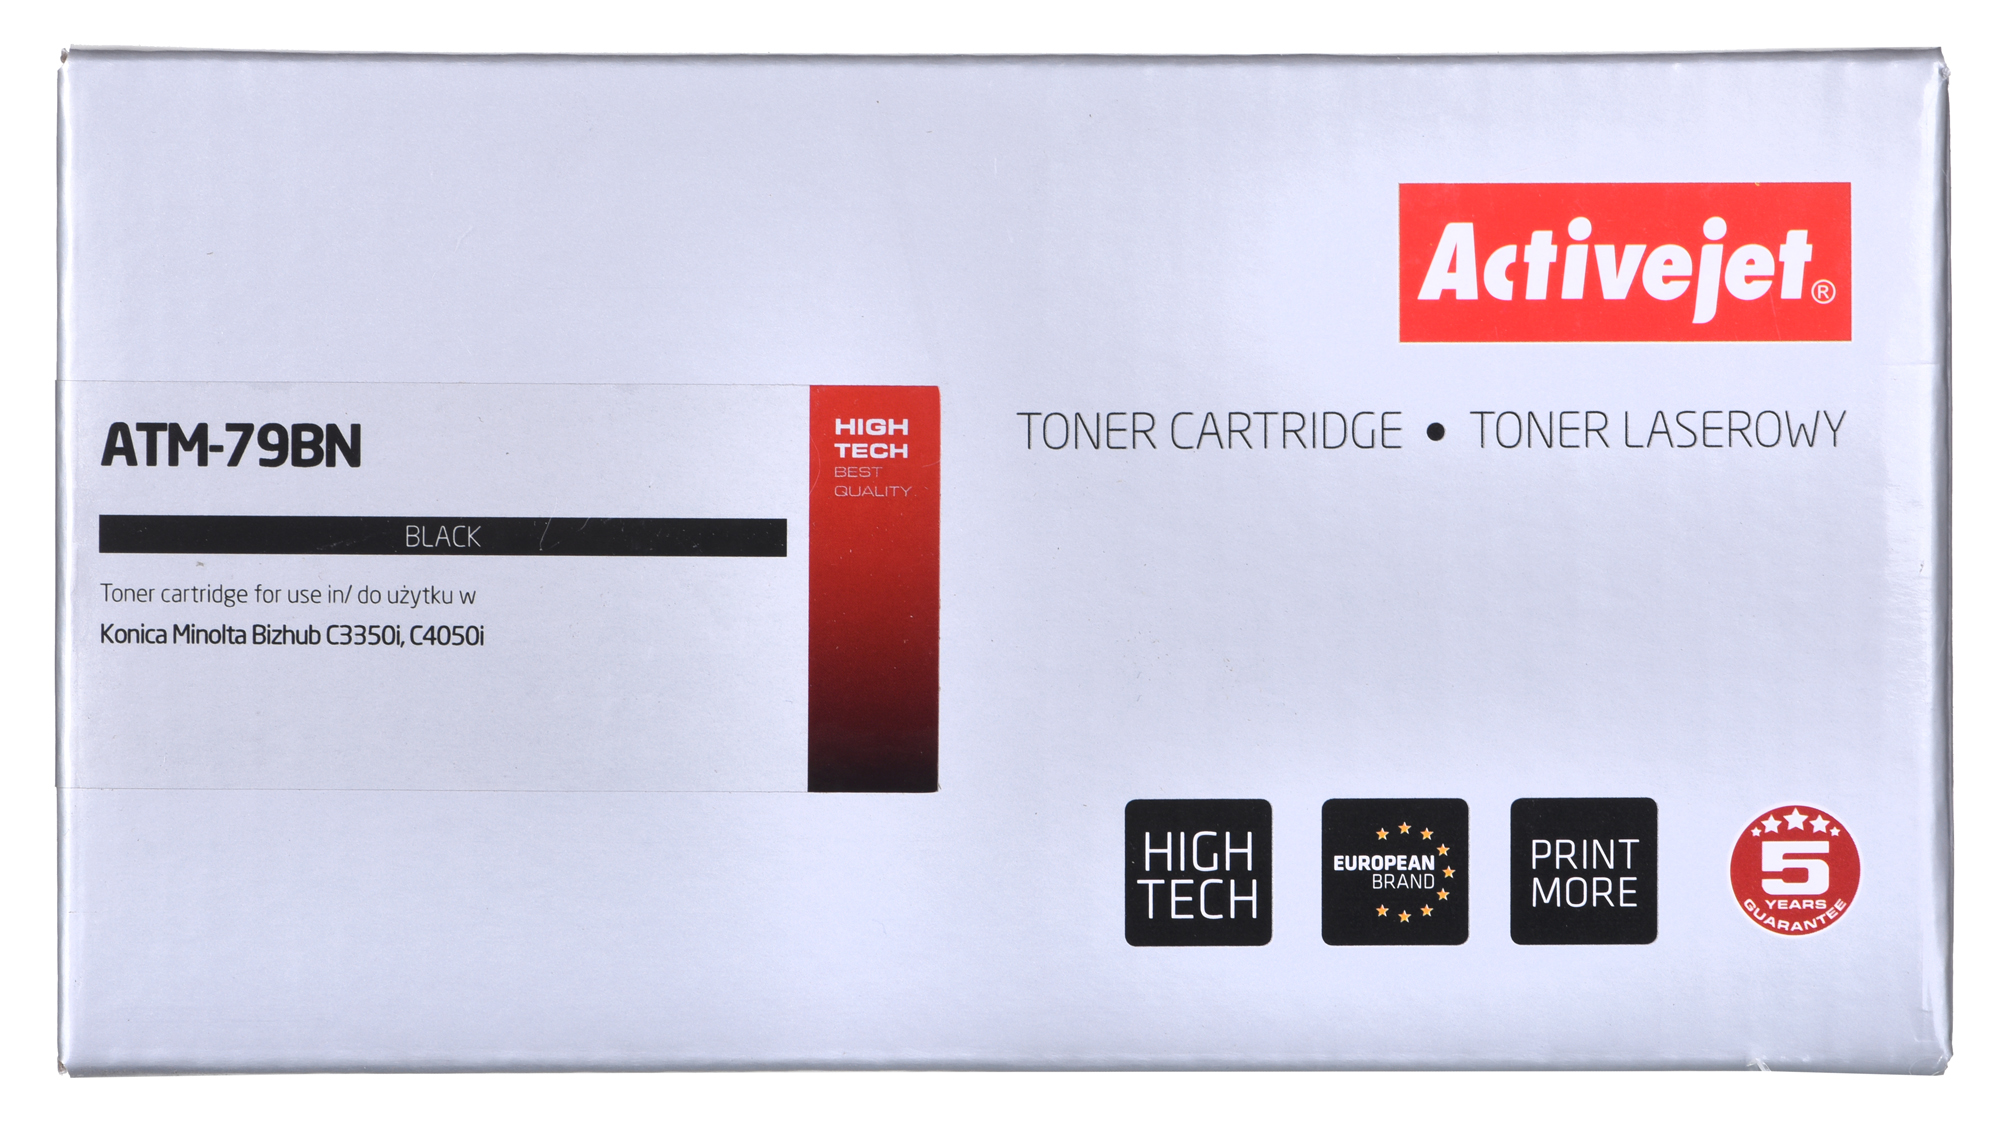 Toner Activejet ATM-79BN do drukarki Konica Minolta, zamiennik Konica Minolta TNP79K; Supreme; 13000 stron; czarny.